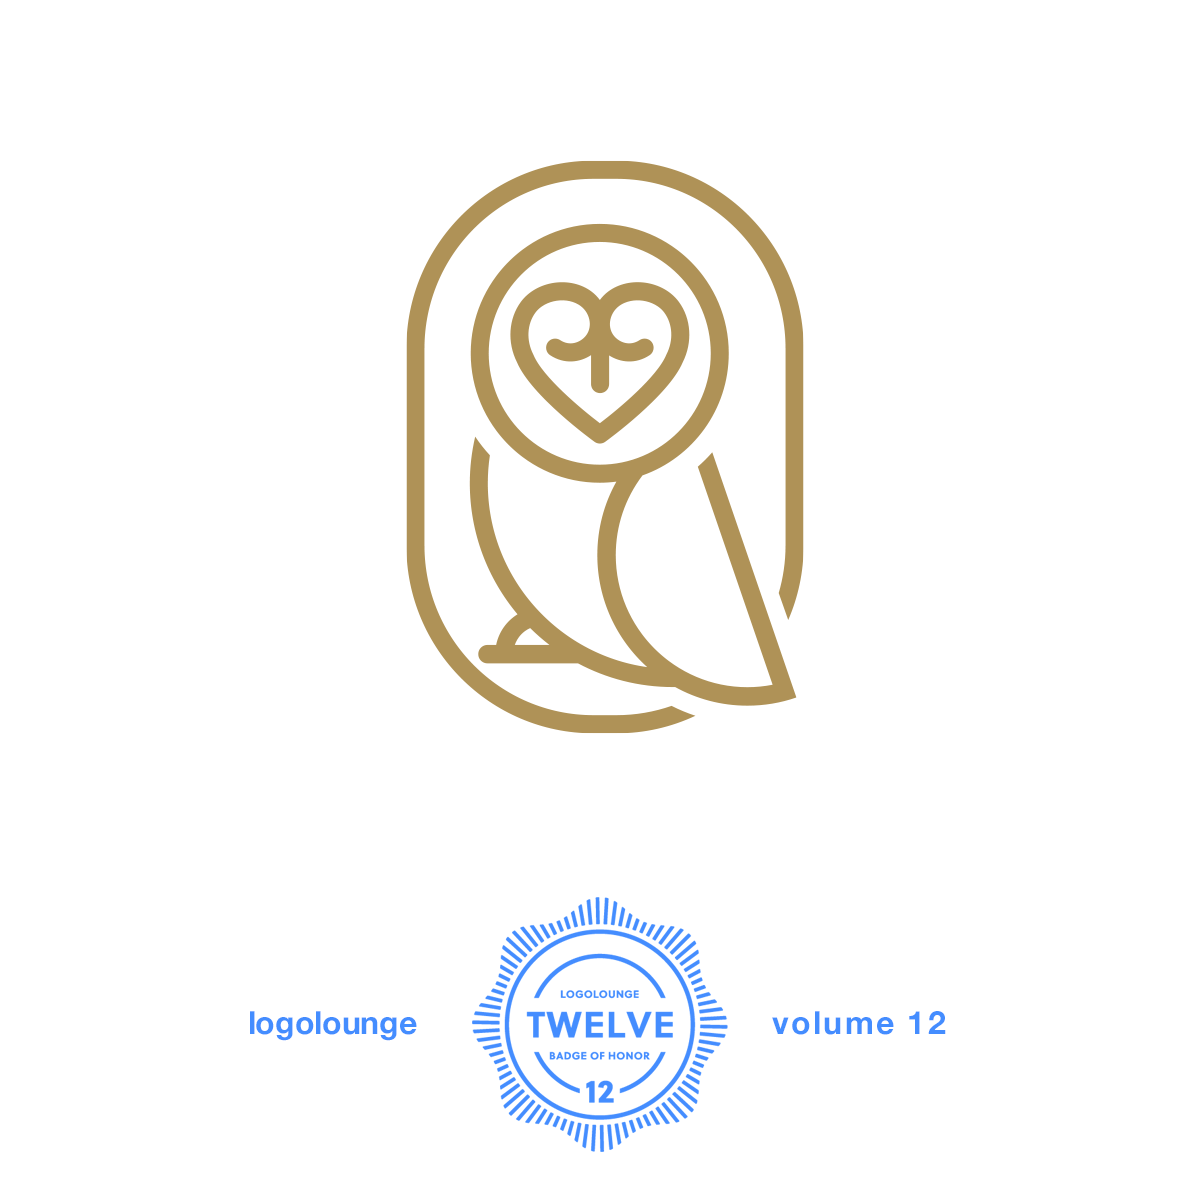 Owl logo mark by Dan Rood